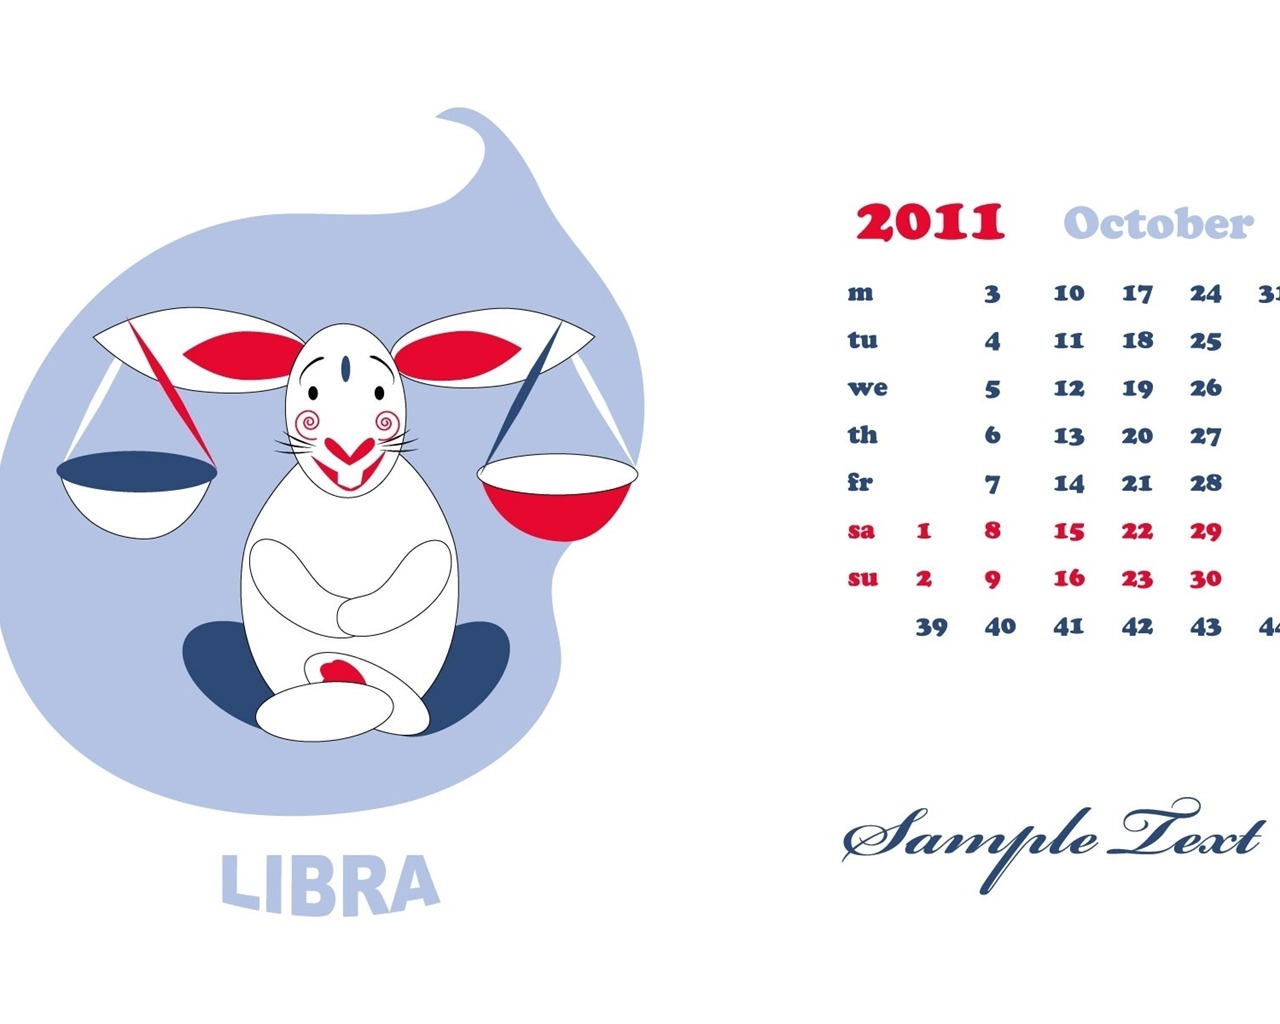 October 2011 Calendar Wallpaper (2) #13 - 1280x1024